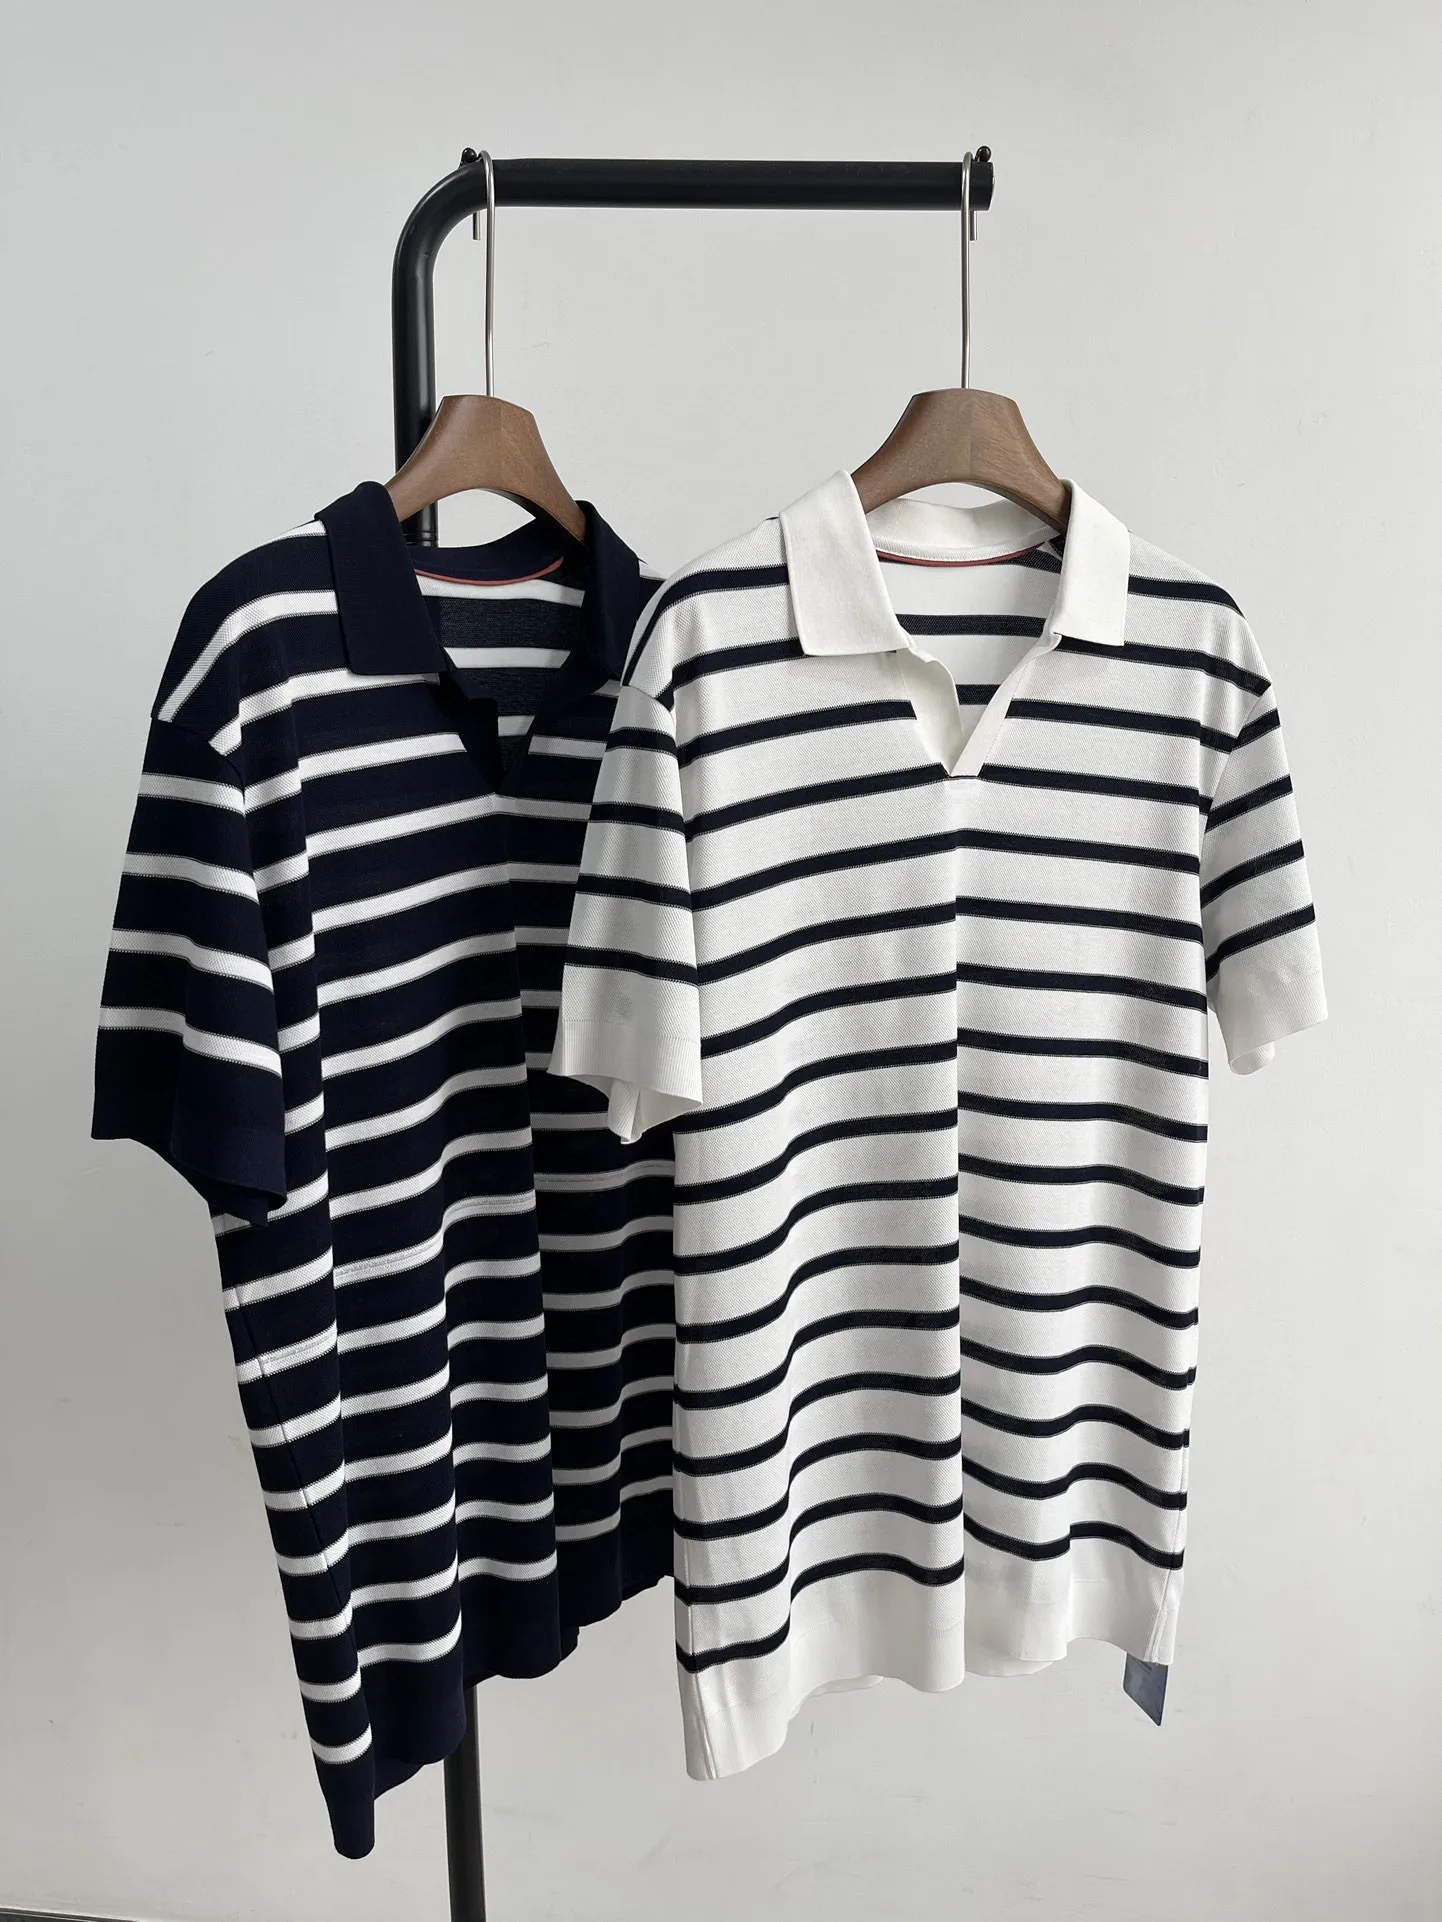 

Lp* Summer New High Quality POLO Shirt High-end Pique Cotton Super Delicate Soft Classic Striped Design Men